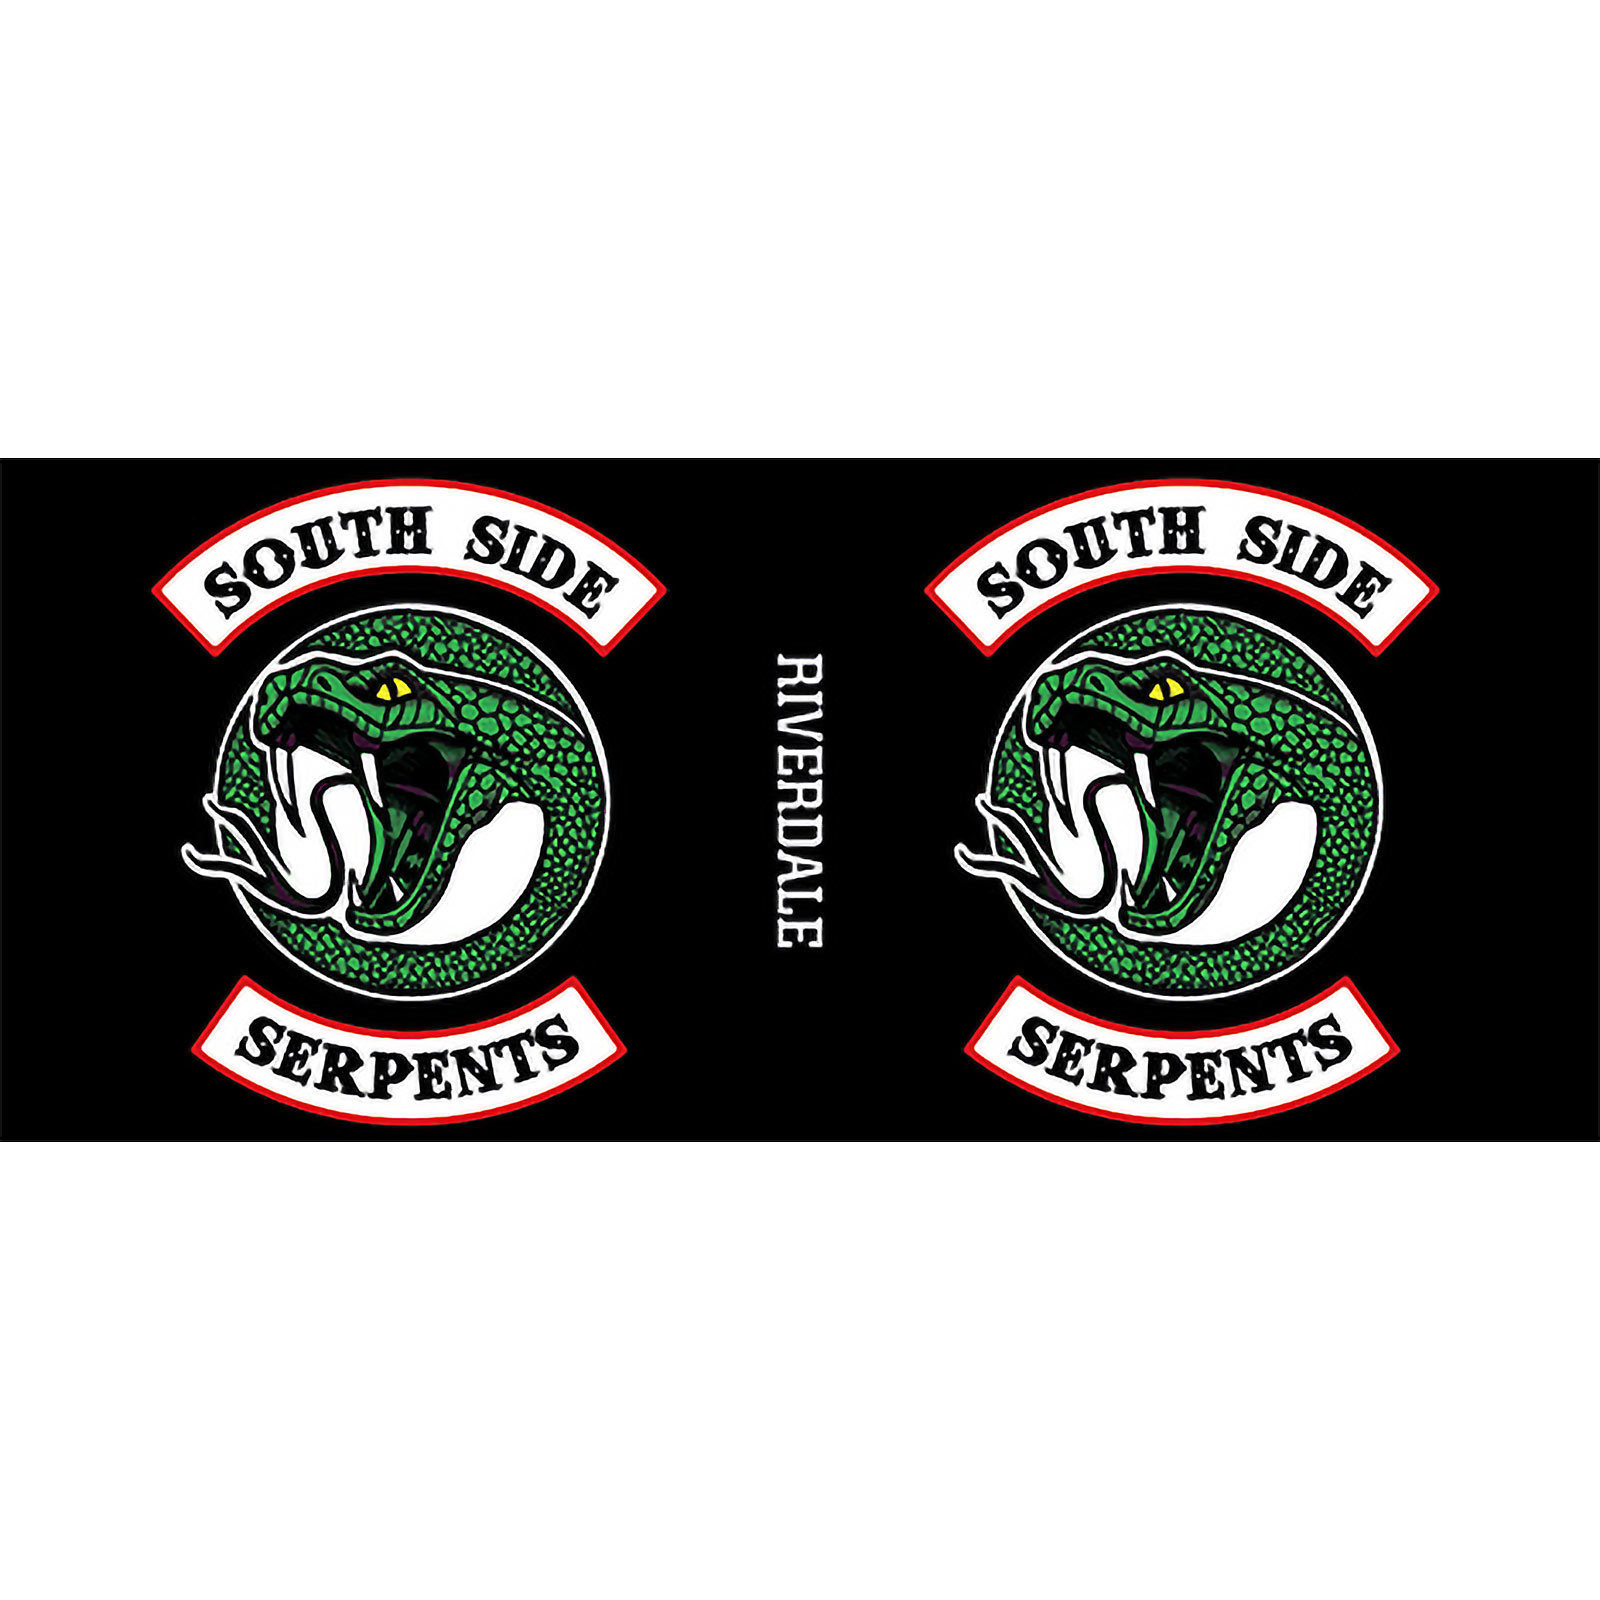 Riverdale - South Side Serpents Mok